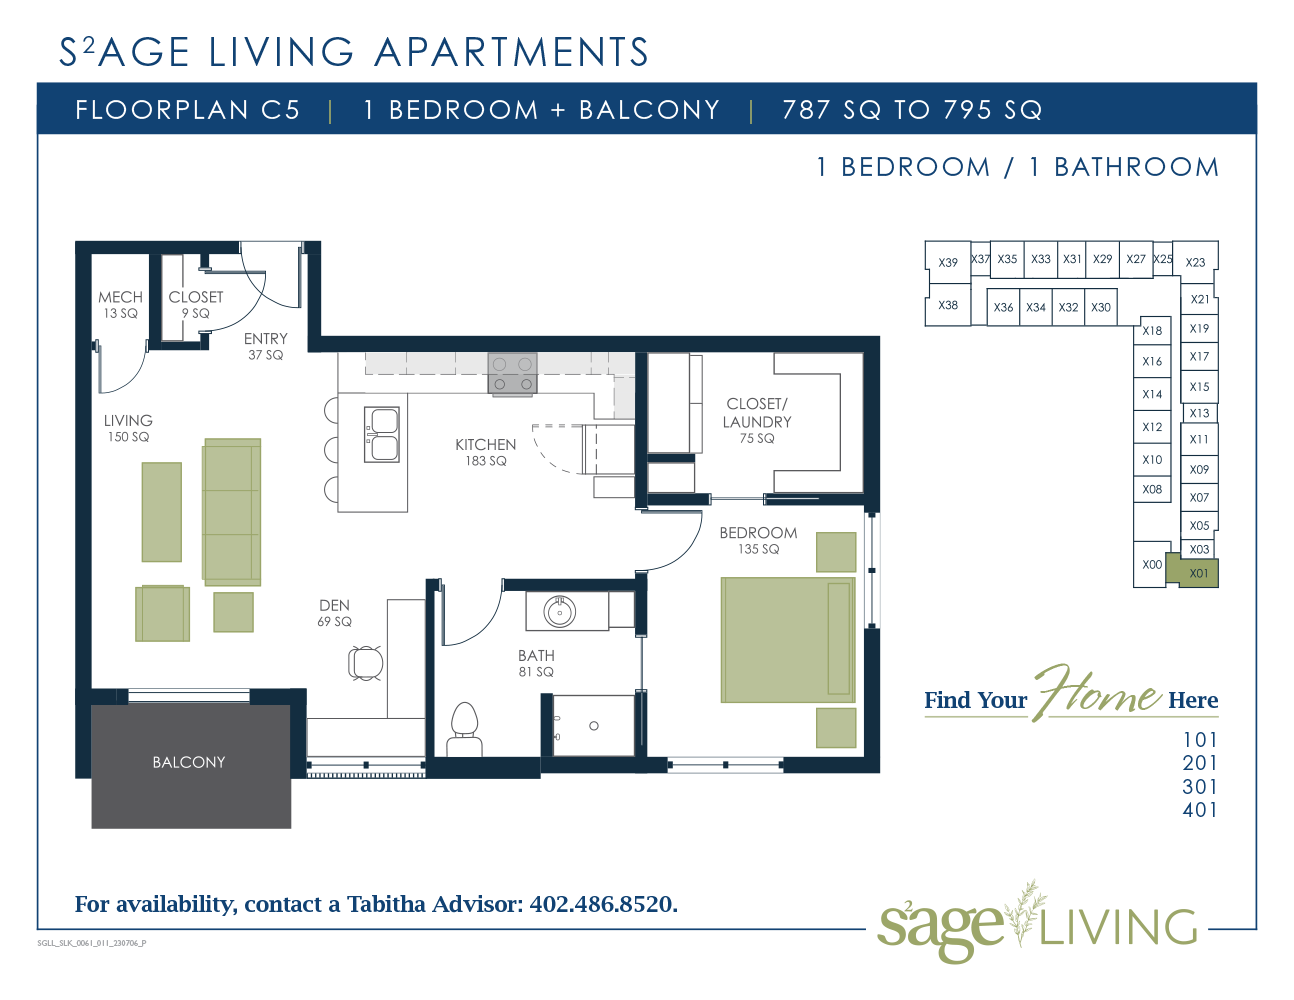 S2age Living Floor Plan, Apartment C5